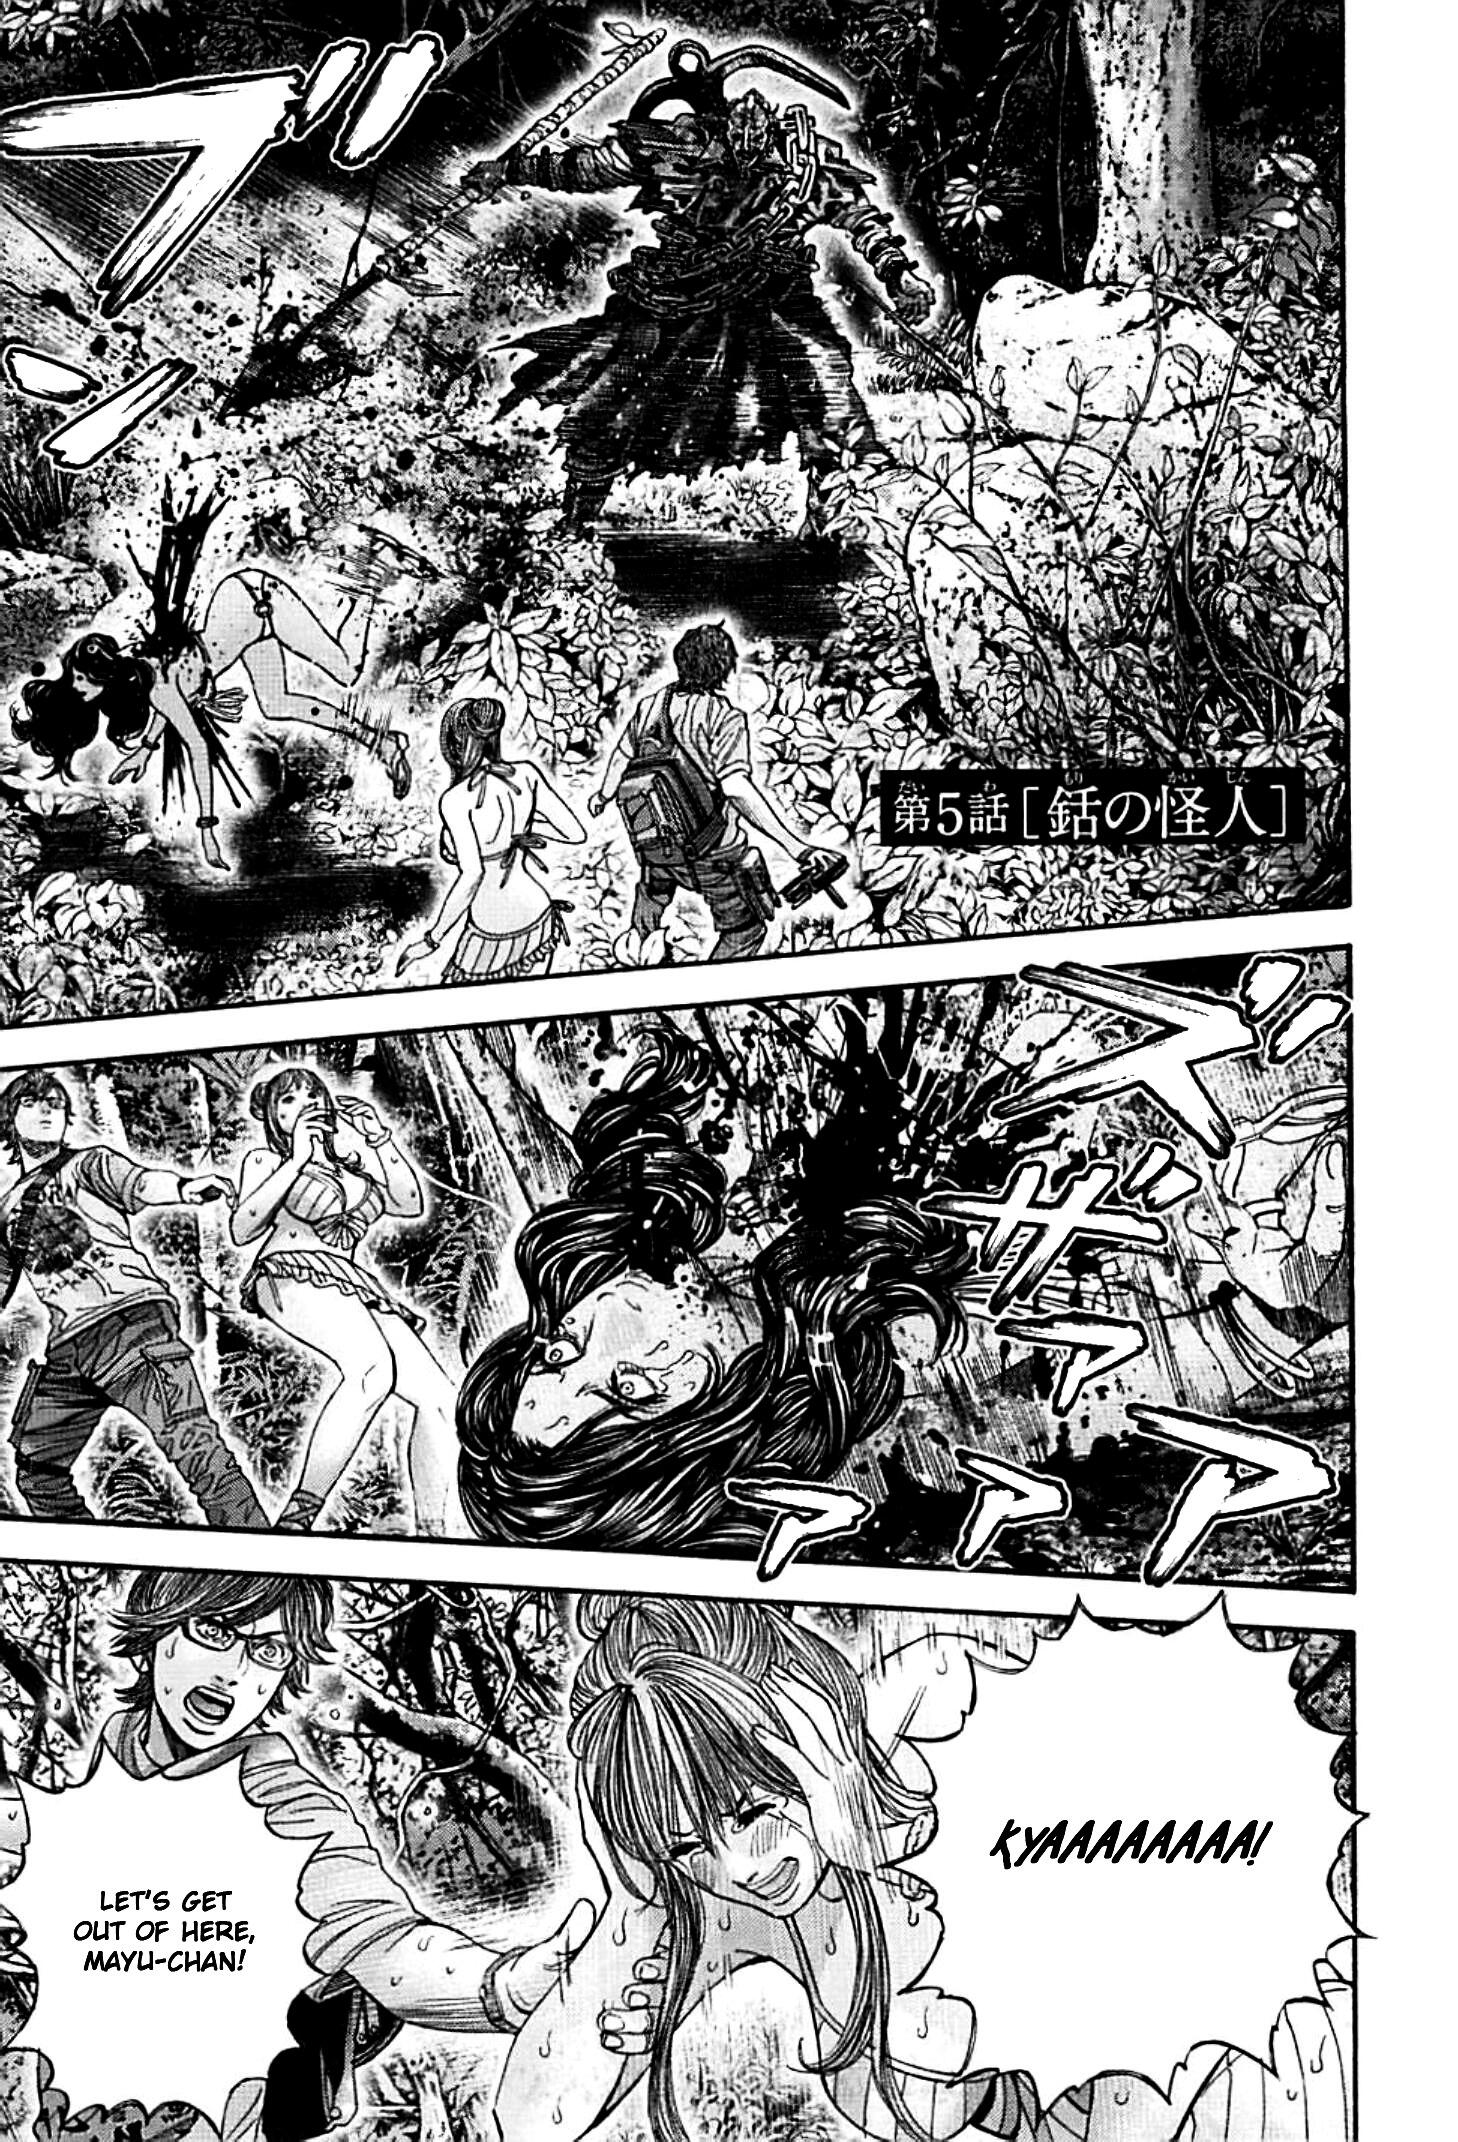 Read Biohazard Heavenly Island Vol 1 Chapter 5 The Dark Figure S Harpoon On Mangakakalot